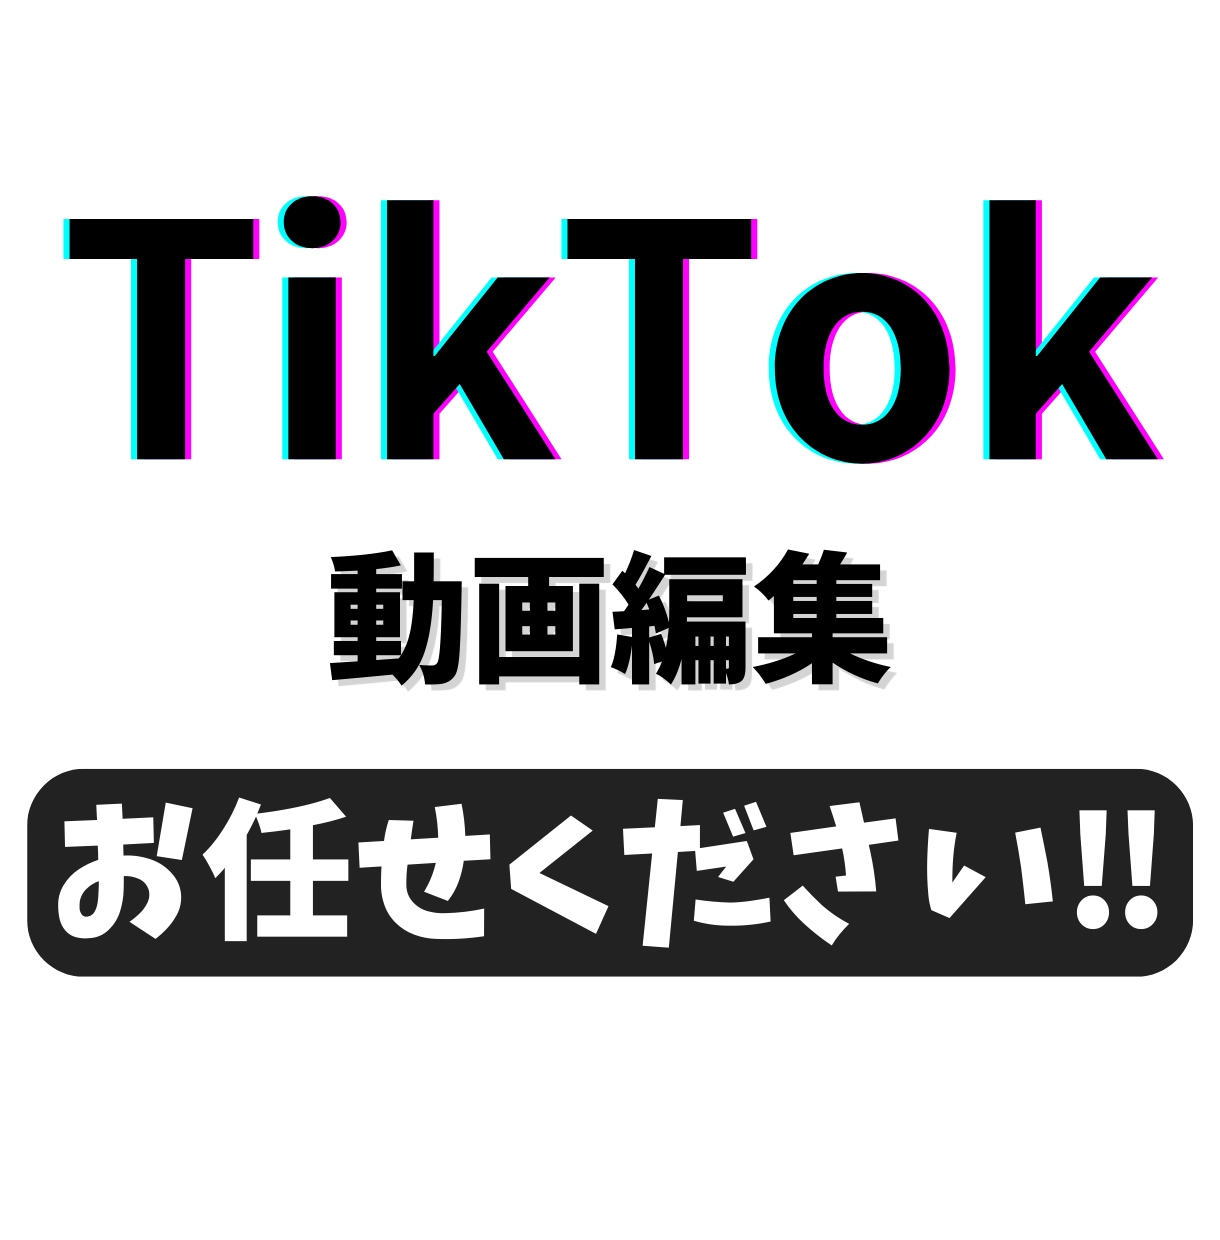 TikTok・Youtube広告編集します TikTok動画・広告の動画編集お任せください！ イメージ1